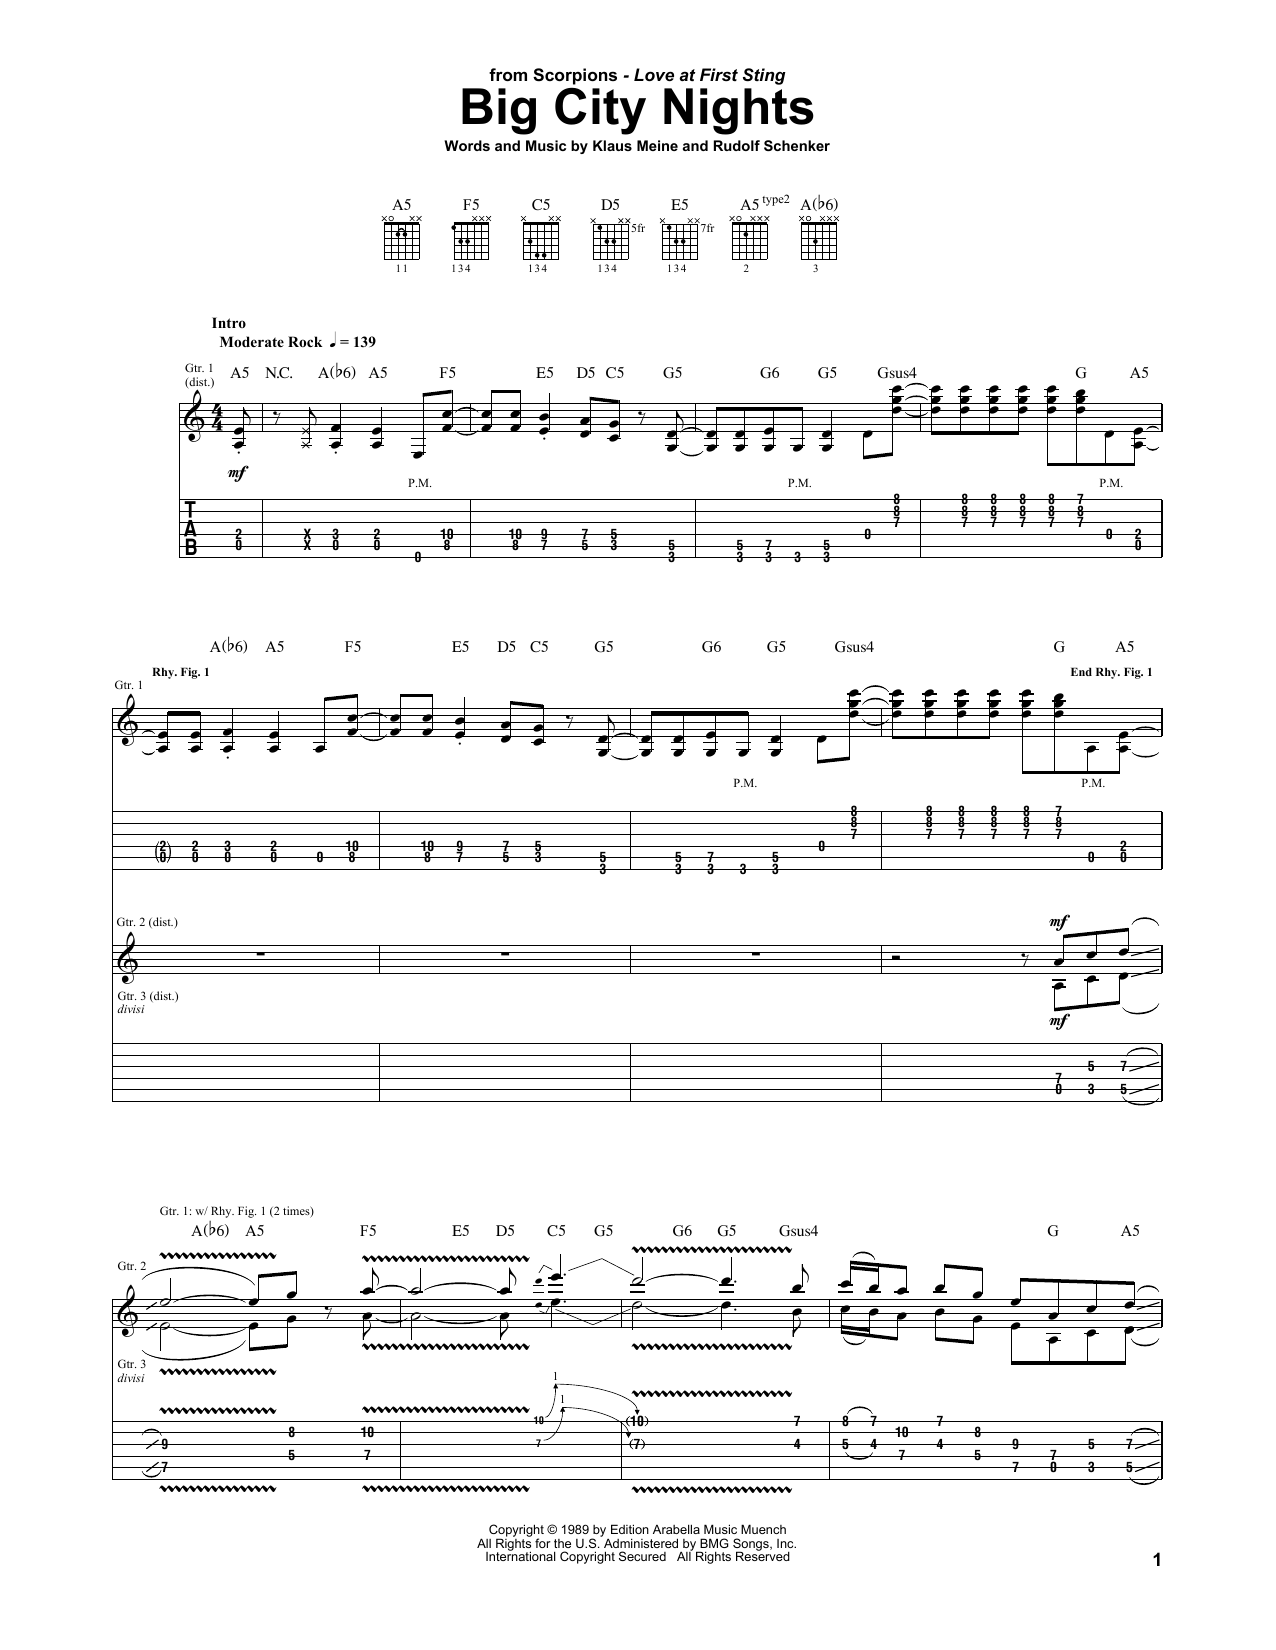 Scorpions Big City Nights Sheet Music Notes & Chords for Guitar Tab Play-Along - Download or Print PDF